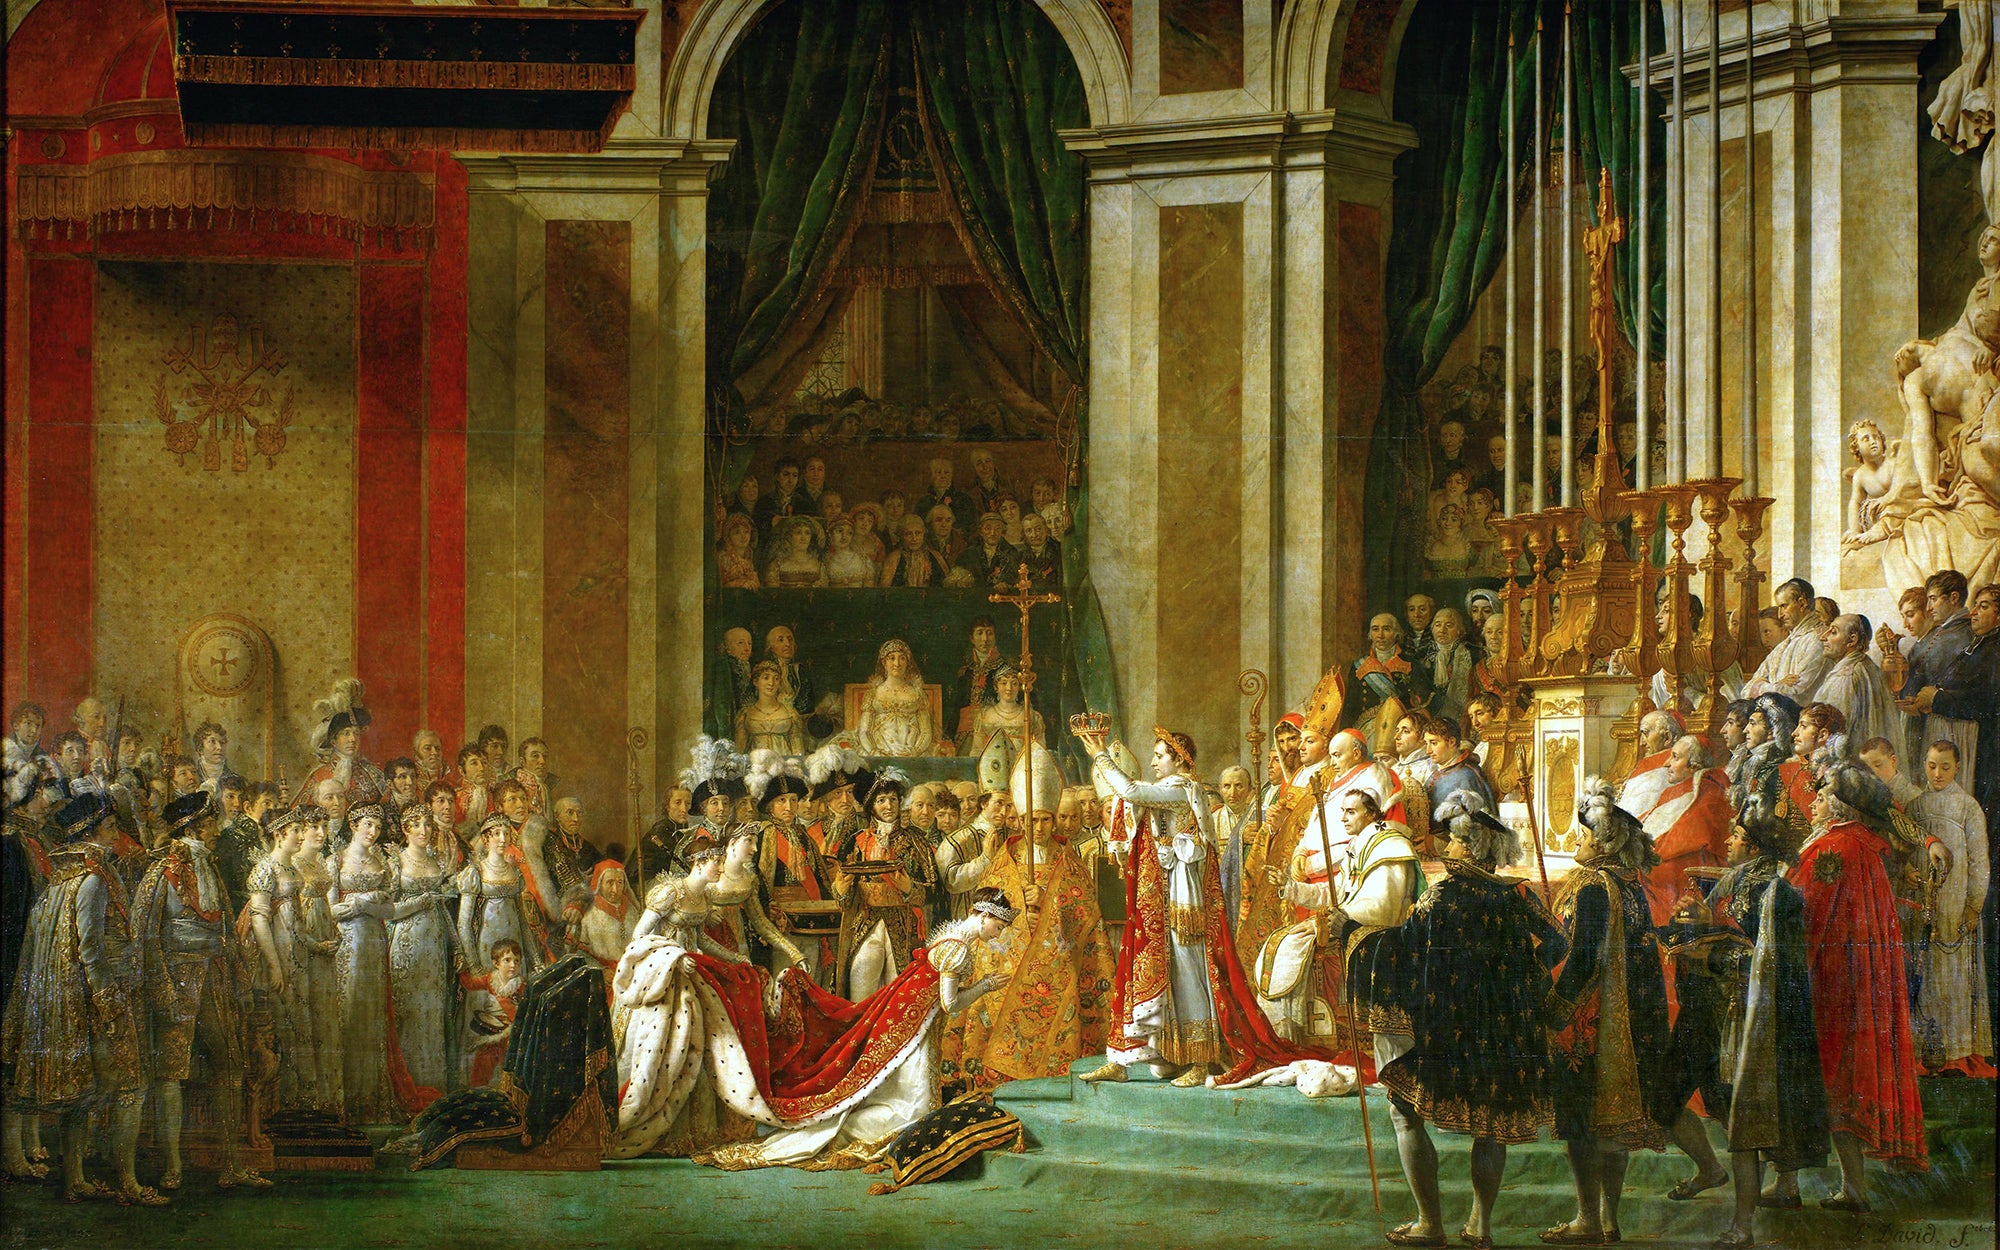 De kroning van Napoleon en Joséphine de Beauharnais